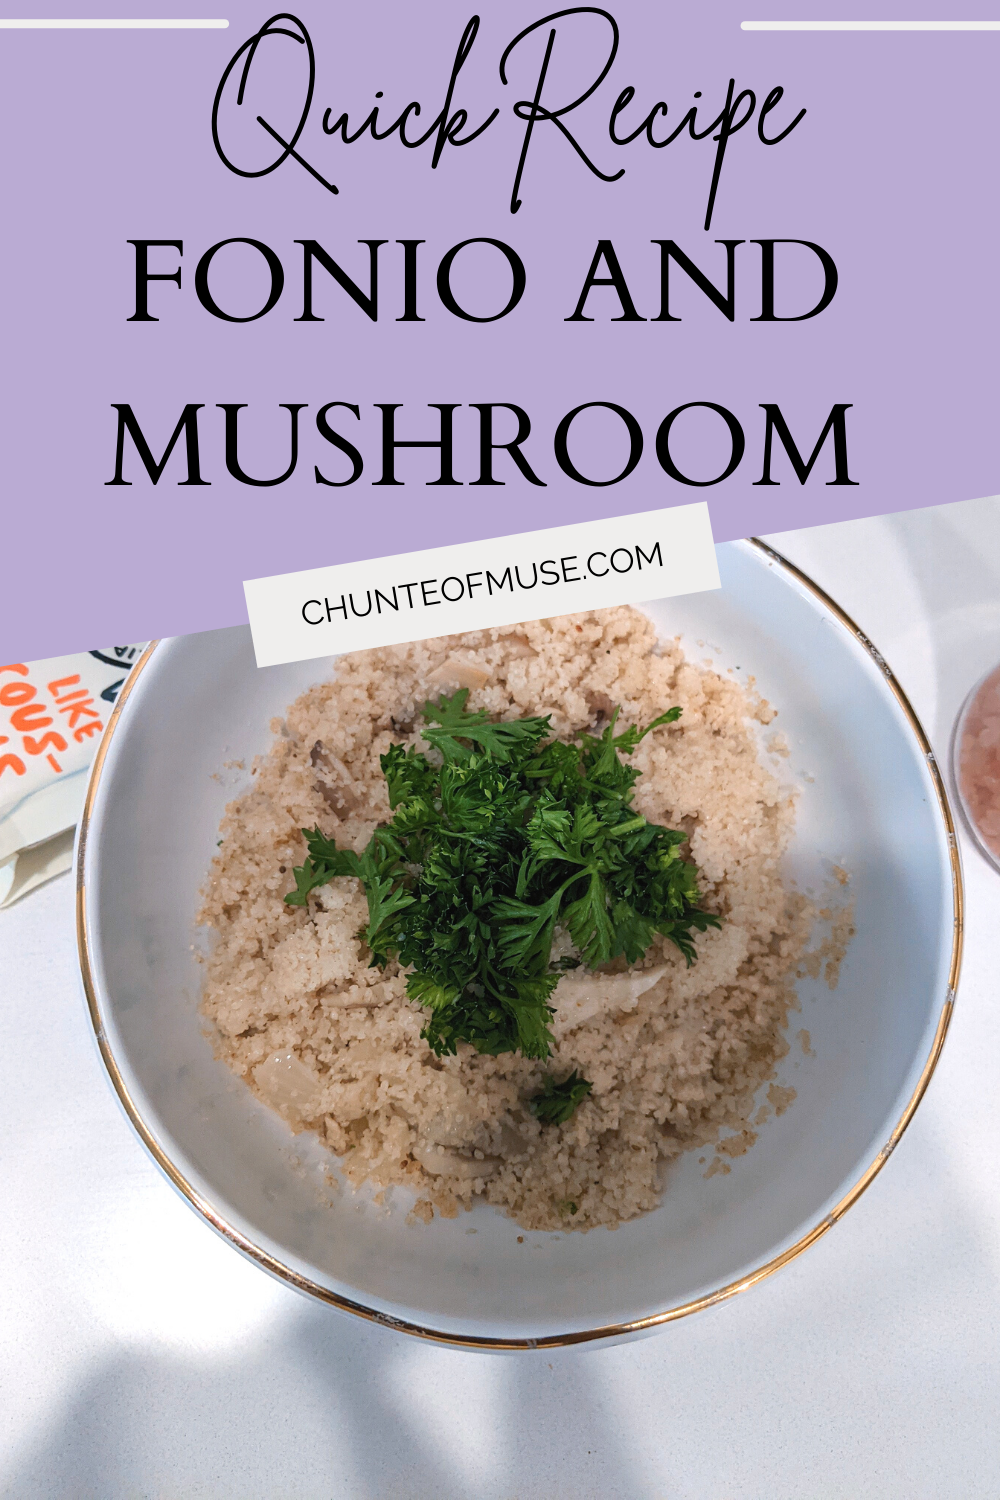 Quick easy fonio grain recipe